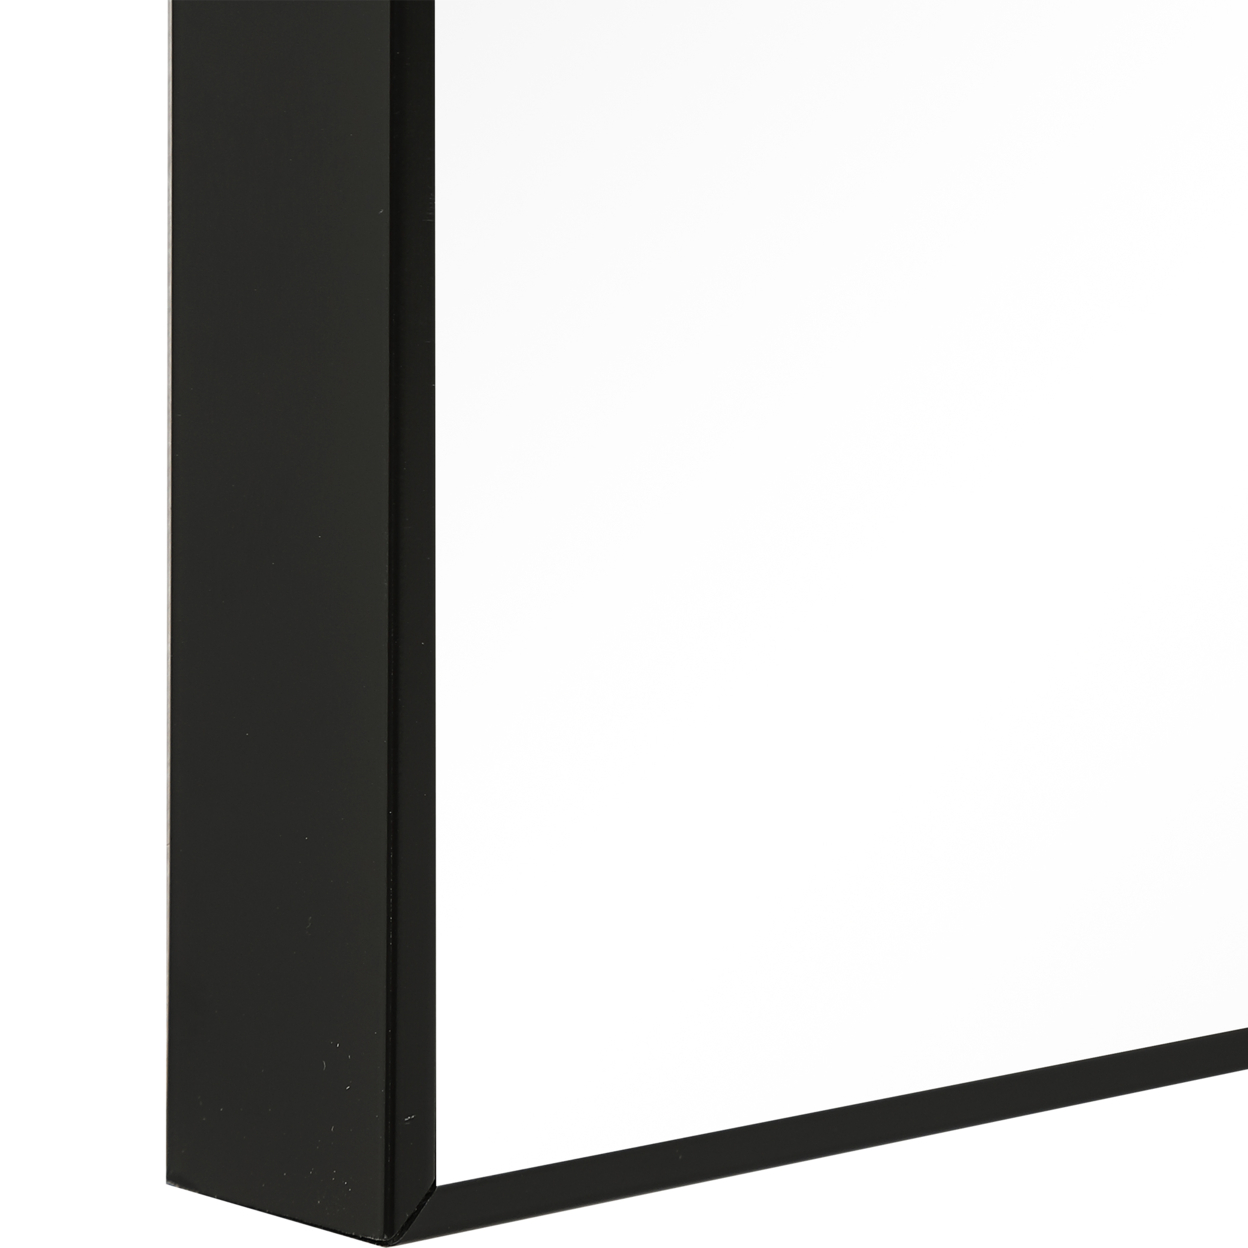 Rectangular Shape Thin Polystyrene Frame Long Mirror, Black- Saltoro Sherpi